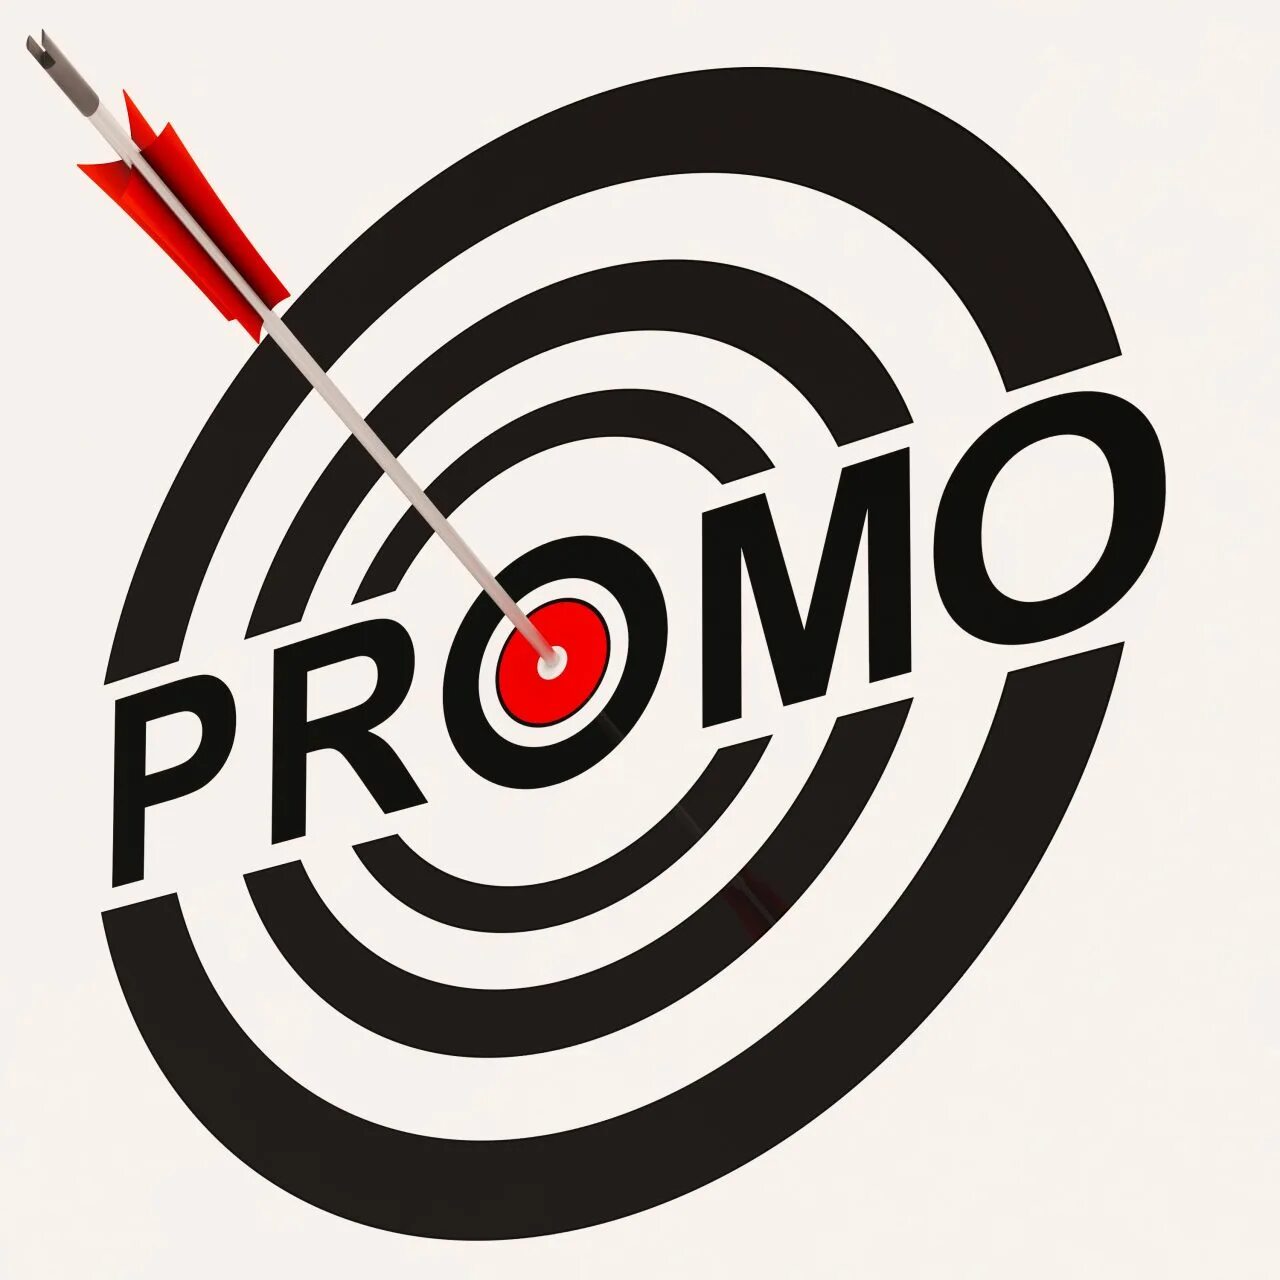 D promotion. Промо лого. Промо акции логотип. Промо без фона. Промоакция рисунок.